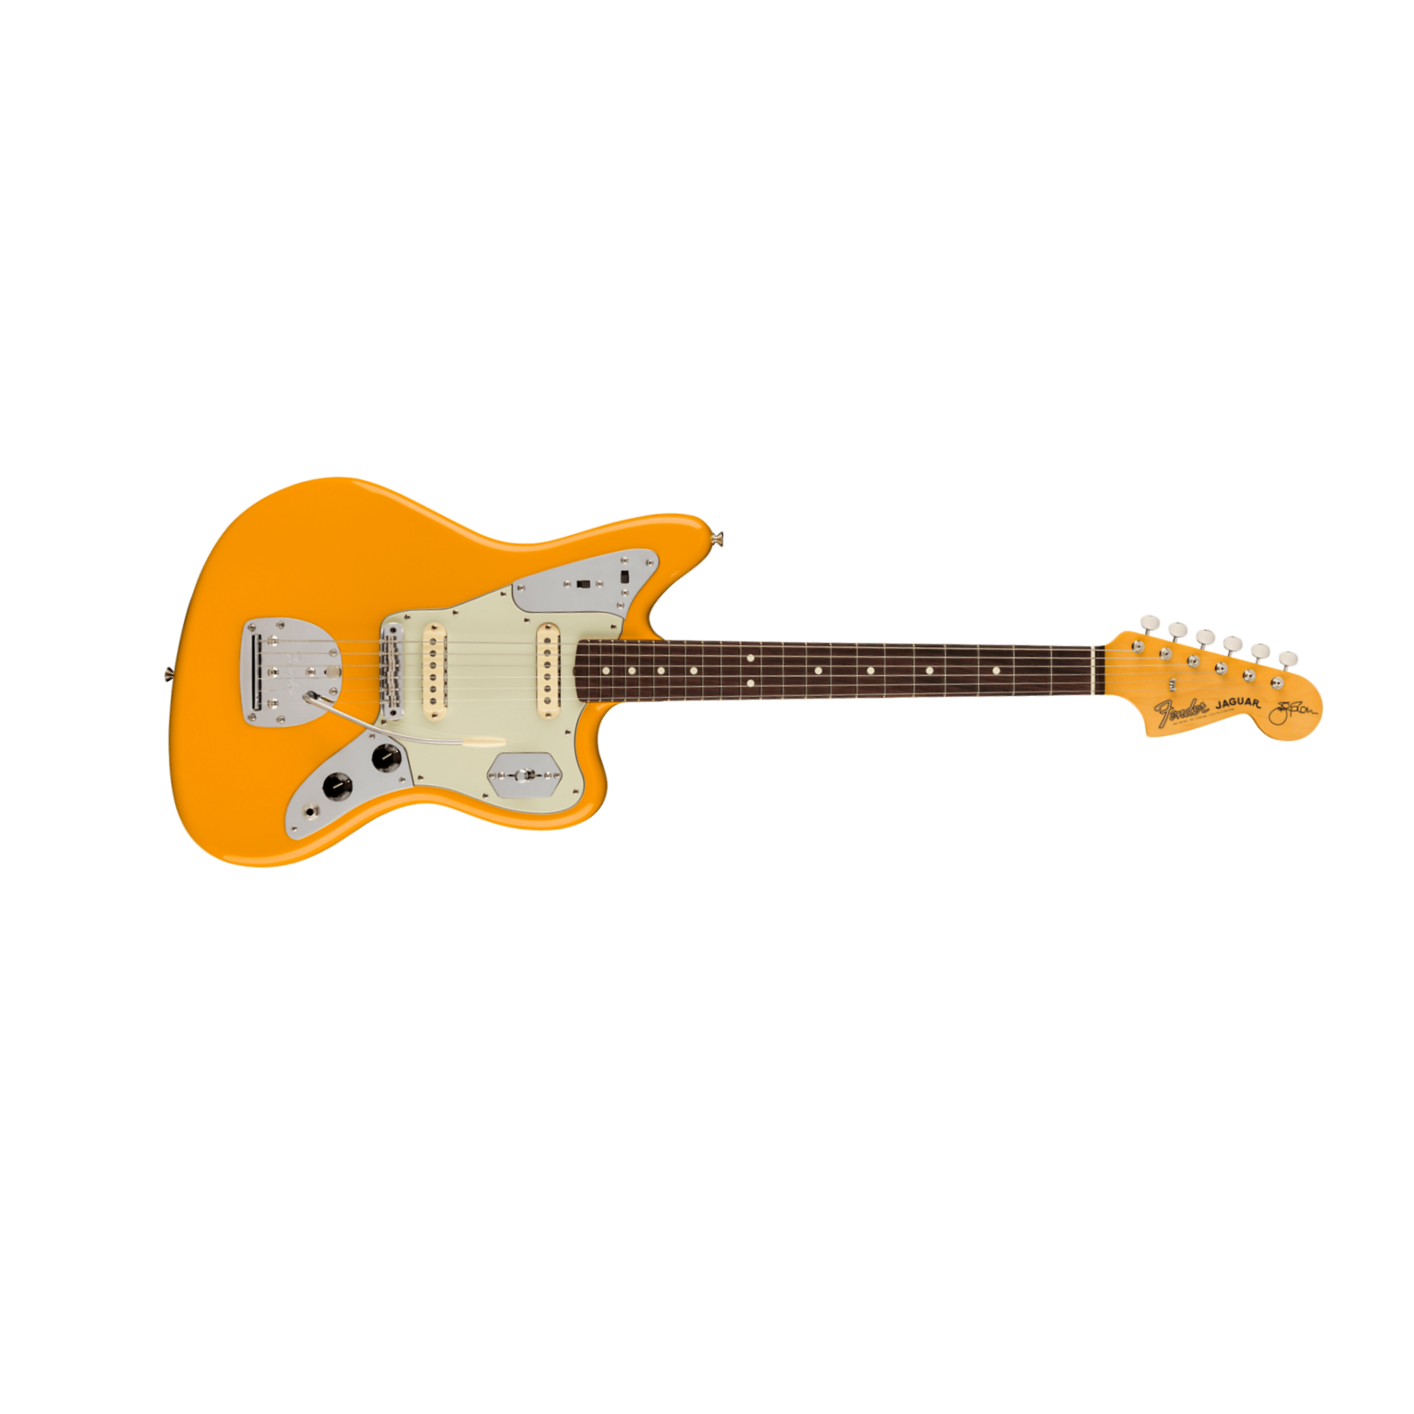 Fender Jaguar Johnny Marr Signature 2s Trem Rw - Fever Dream Yellow - Retro rock electric guitar - Main picture